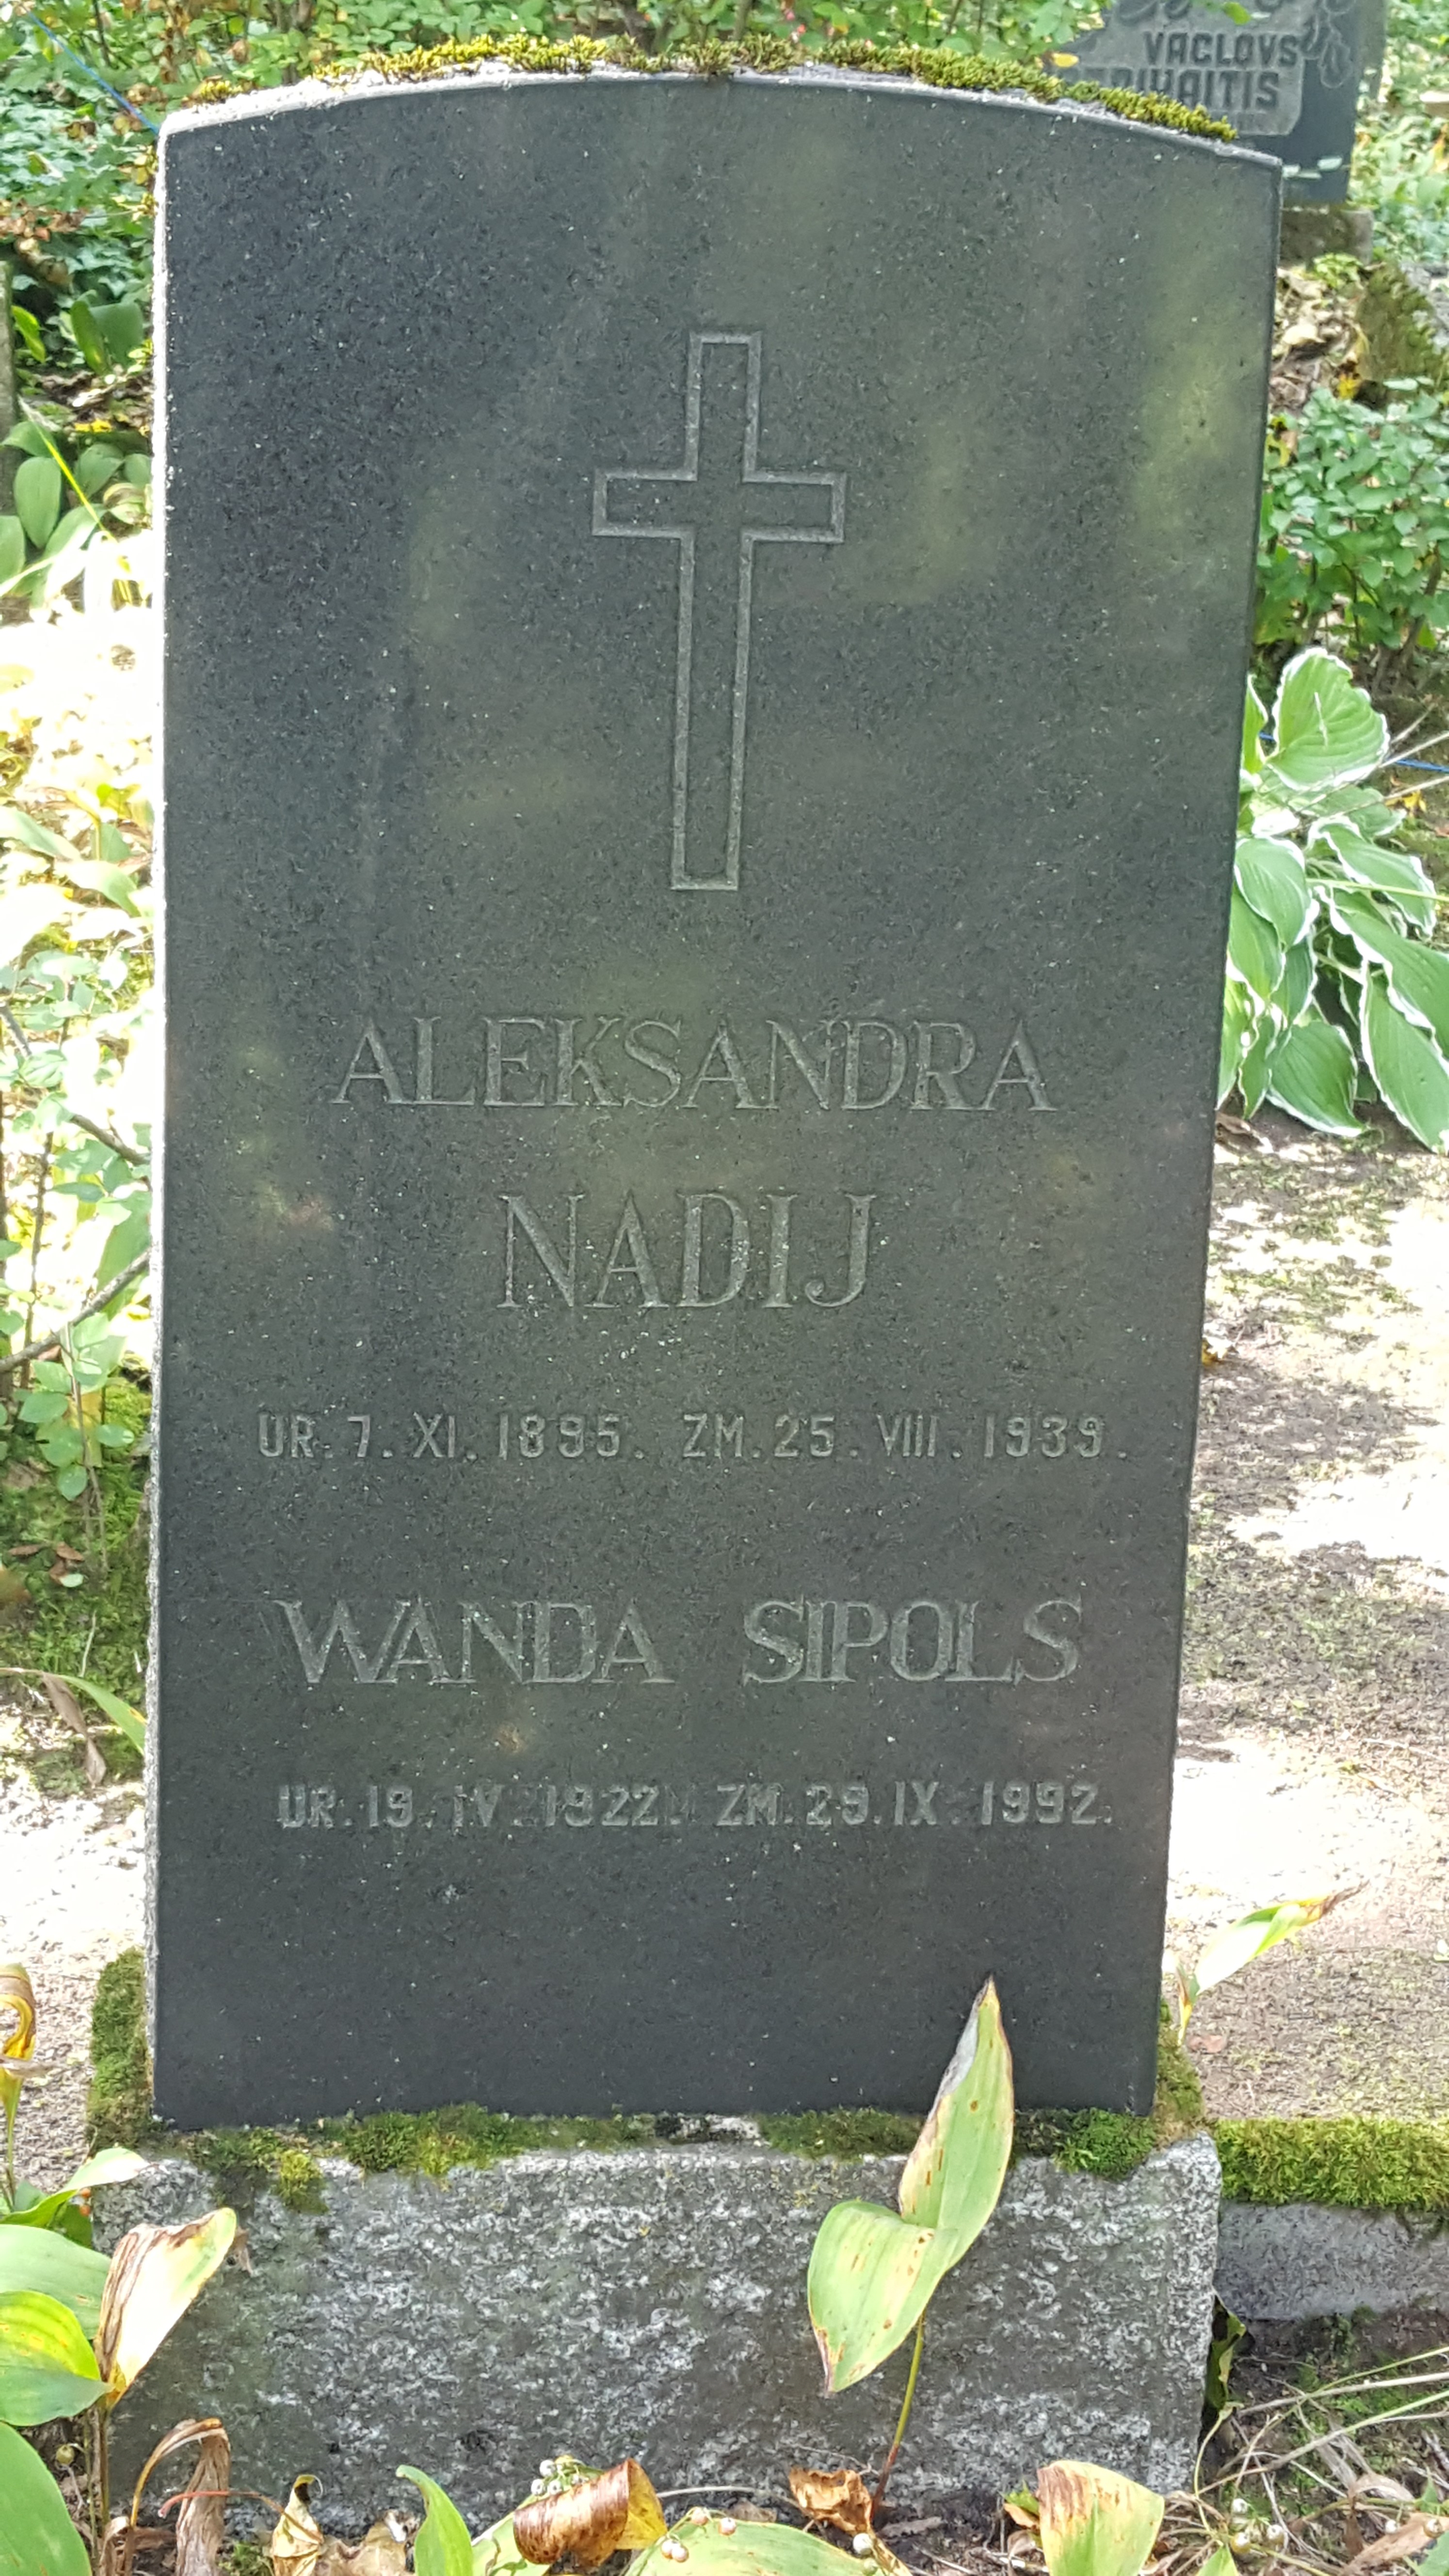 Inscription from the gravestone of Alexandra Nadij and Wanda Sipols, St Michael's Cemetery in Riga, as of 2021.